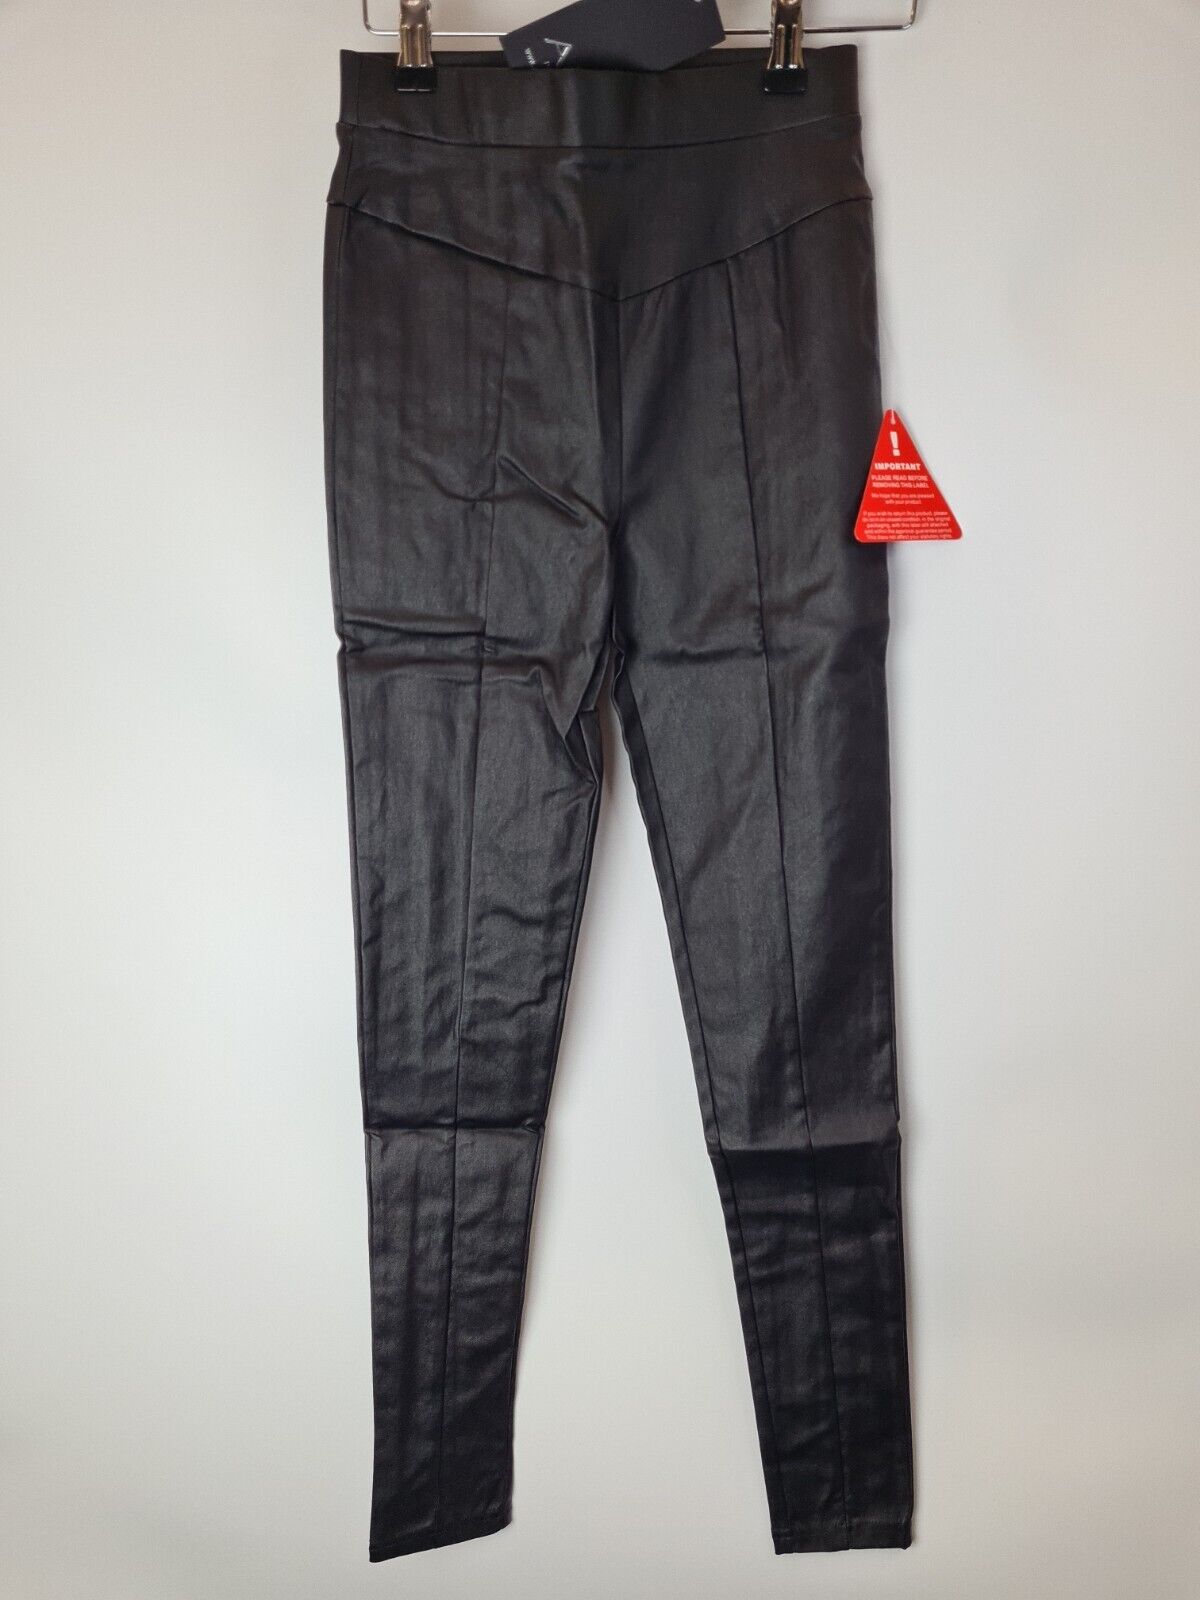 Ax Paris High Waisted Faux Leather Black Leggings Size UK 6 **** V31